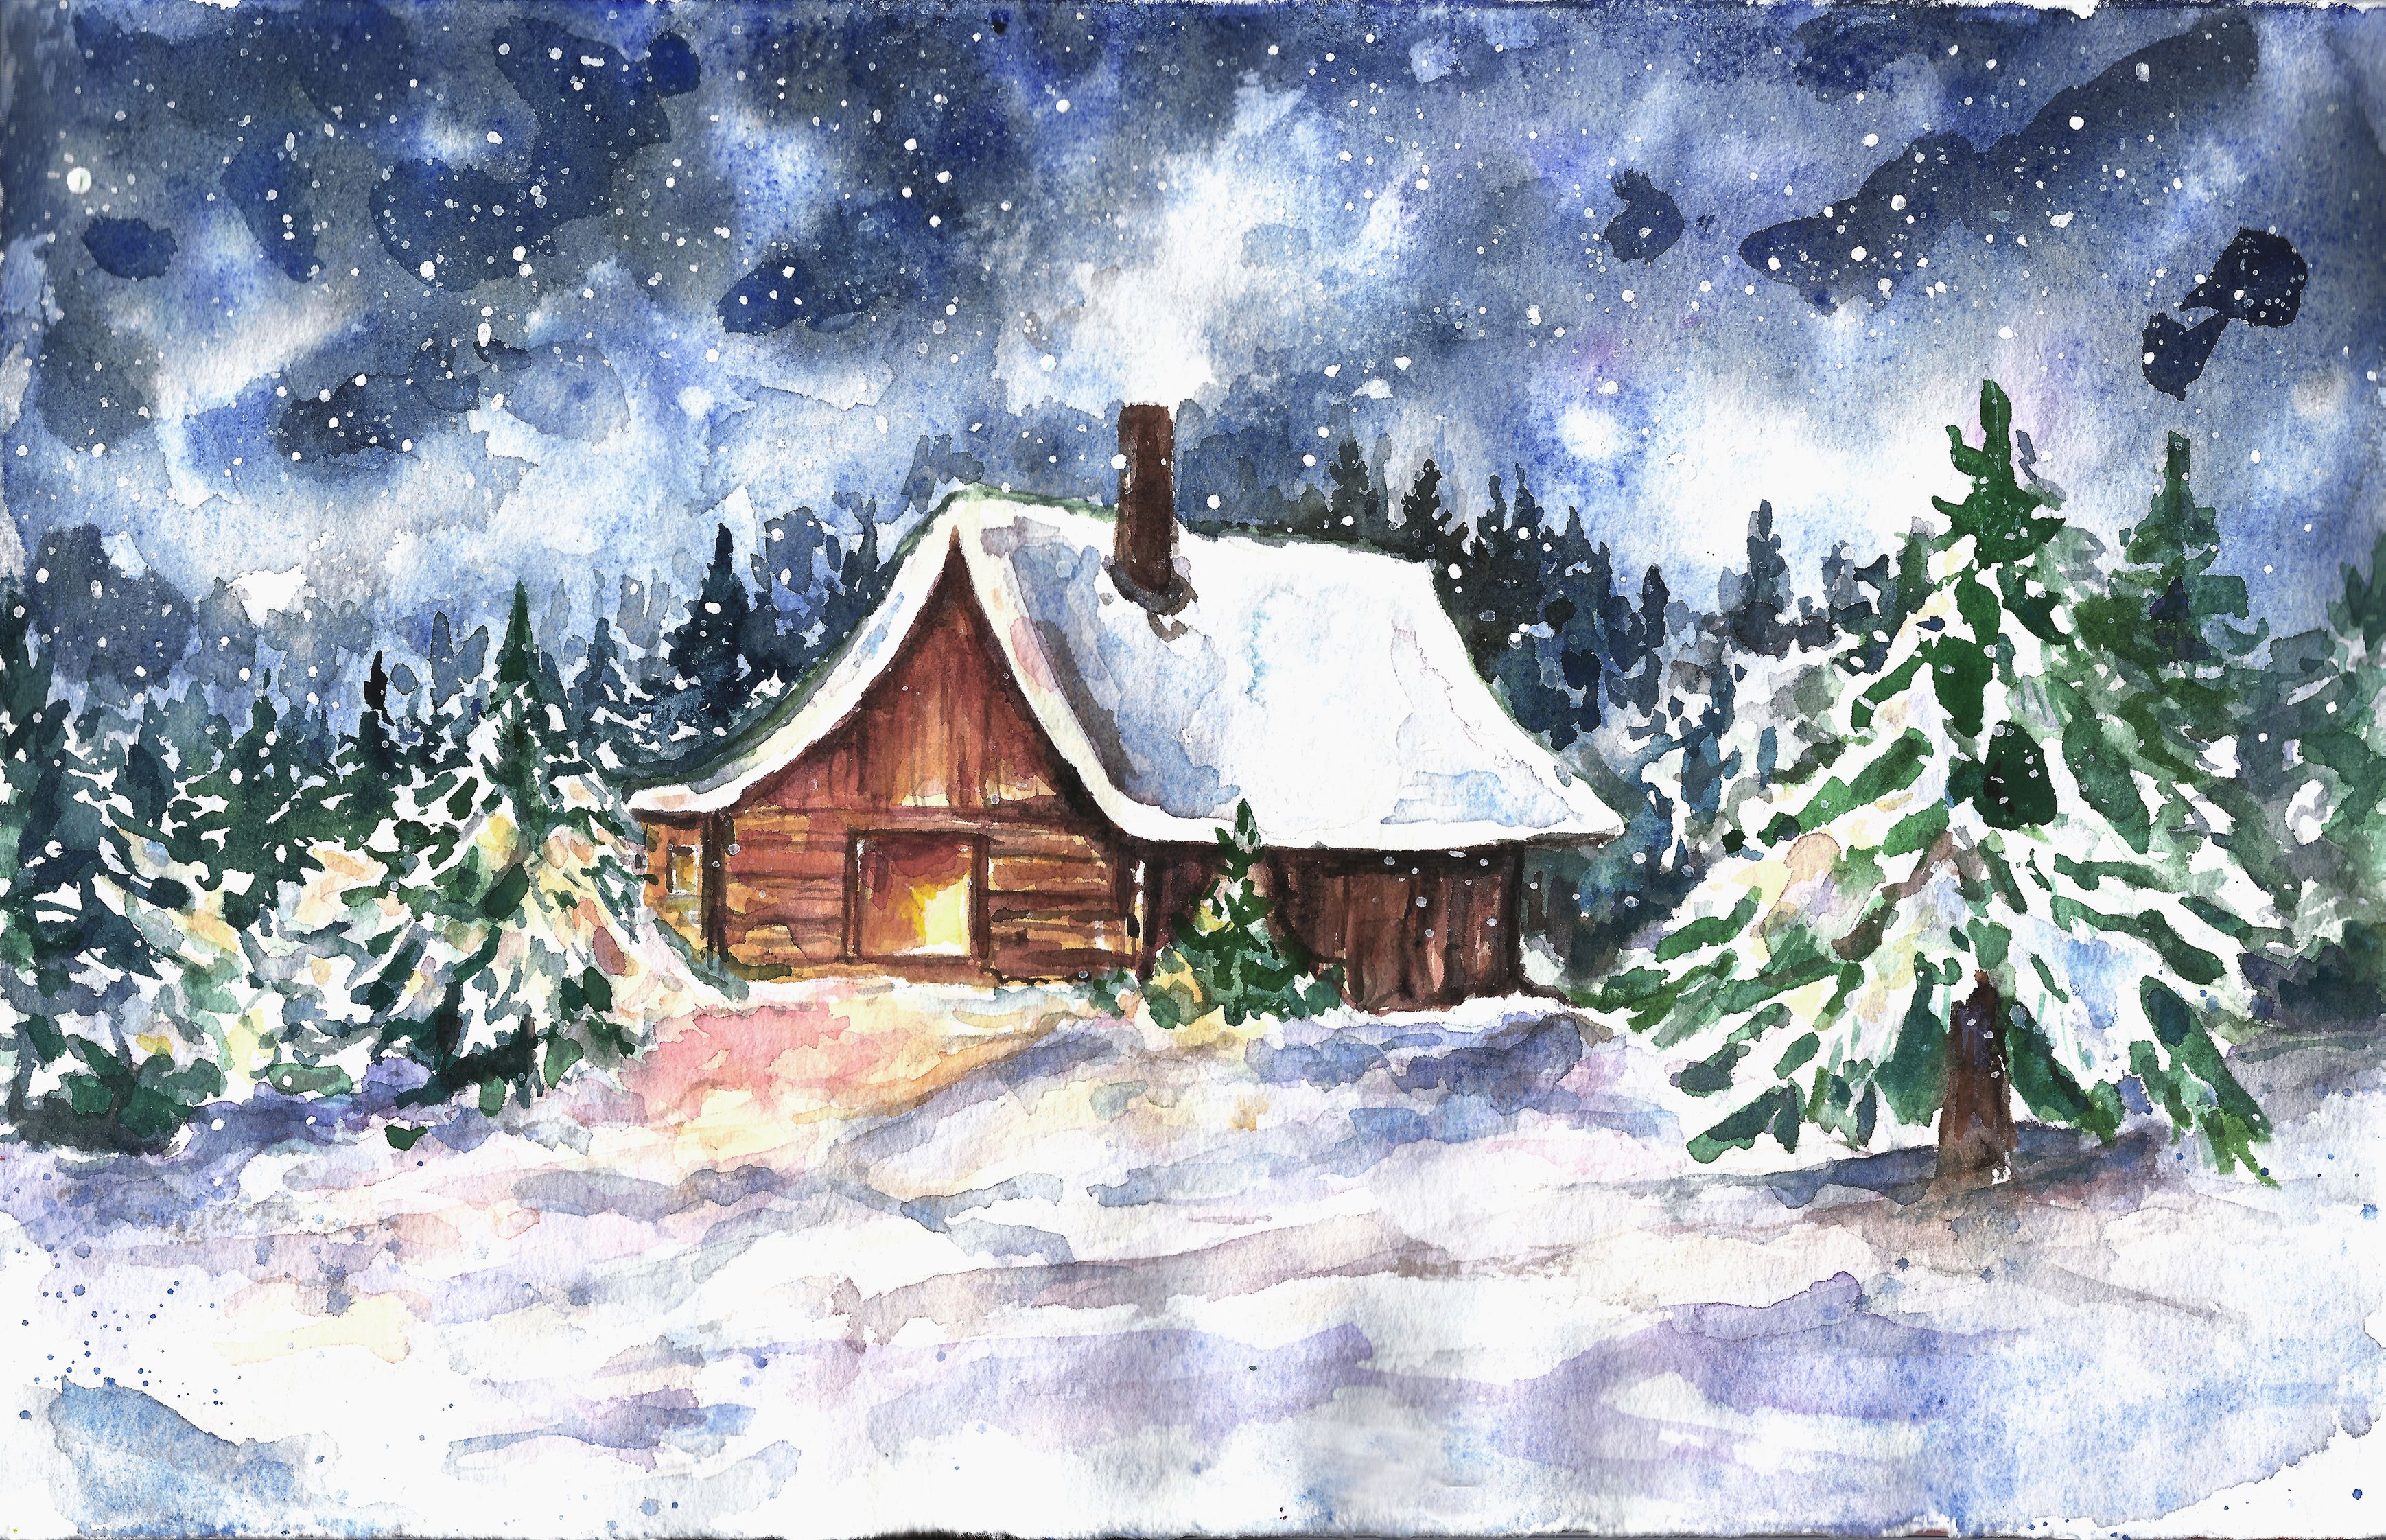 Watercolor Winter Wonderland Snow House Art print Christmas.